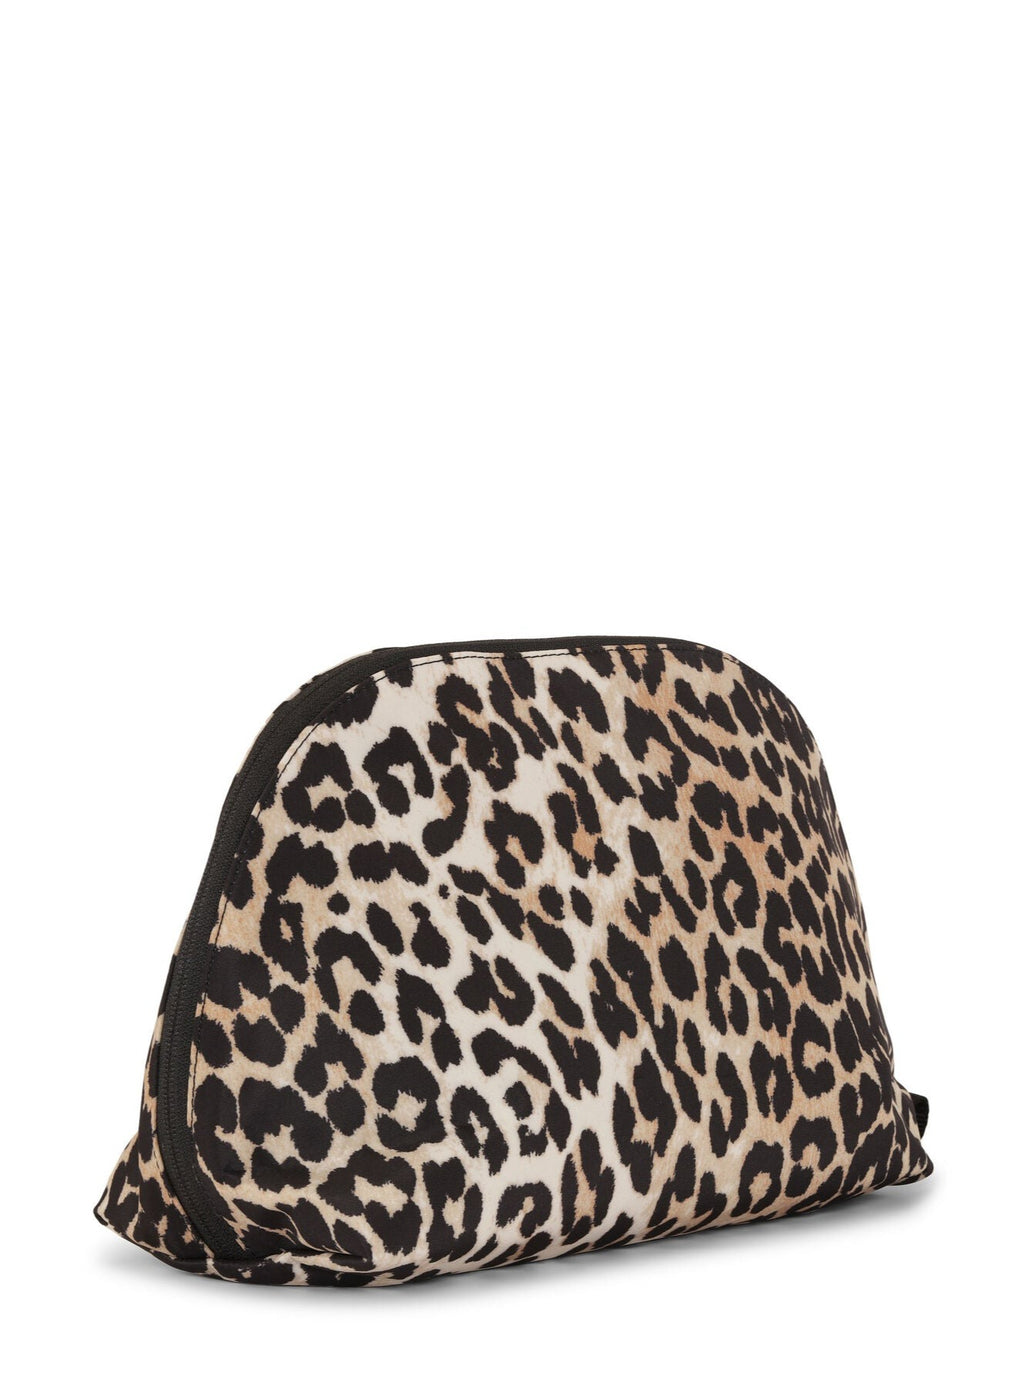 Vanity Bag in Leopard